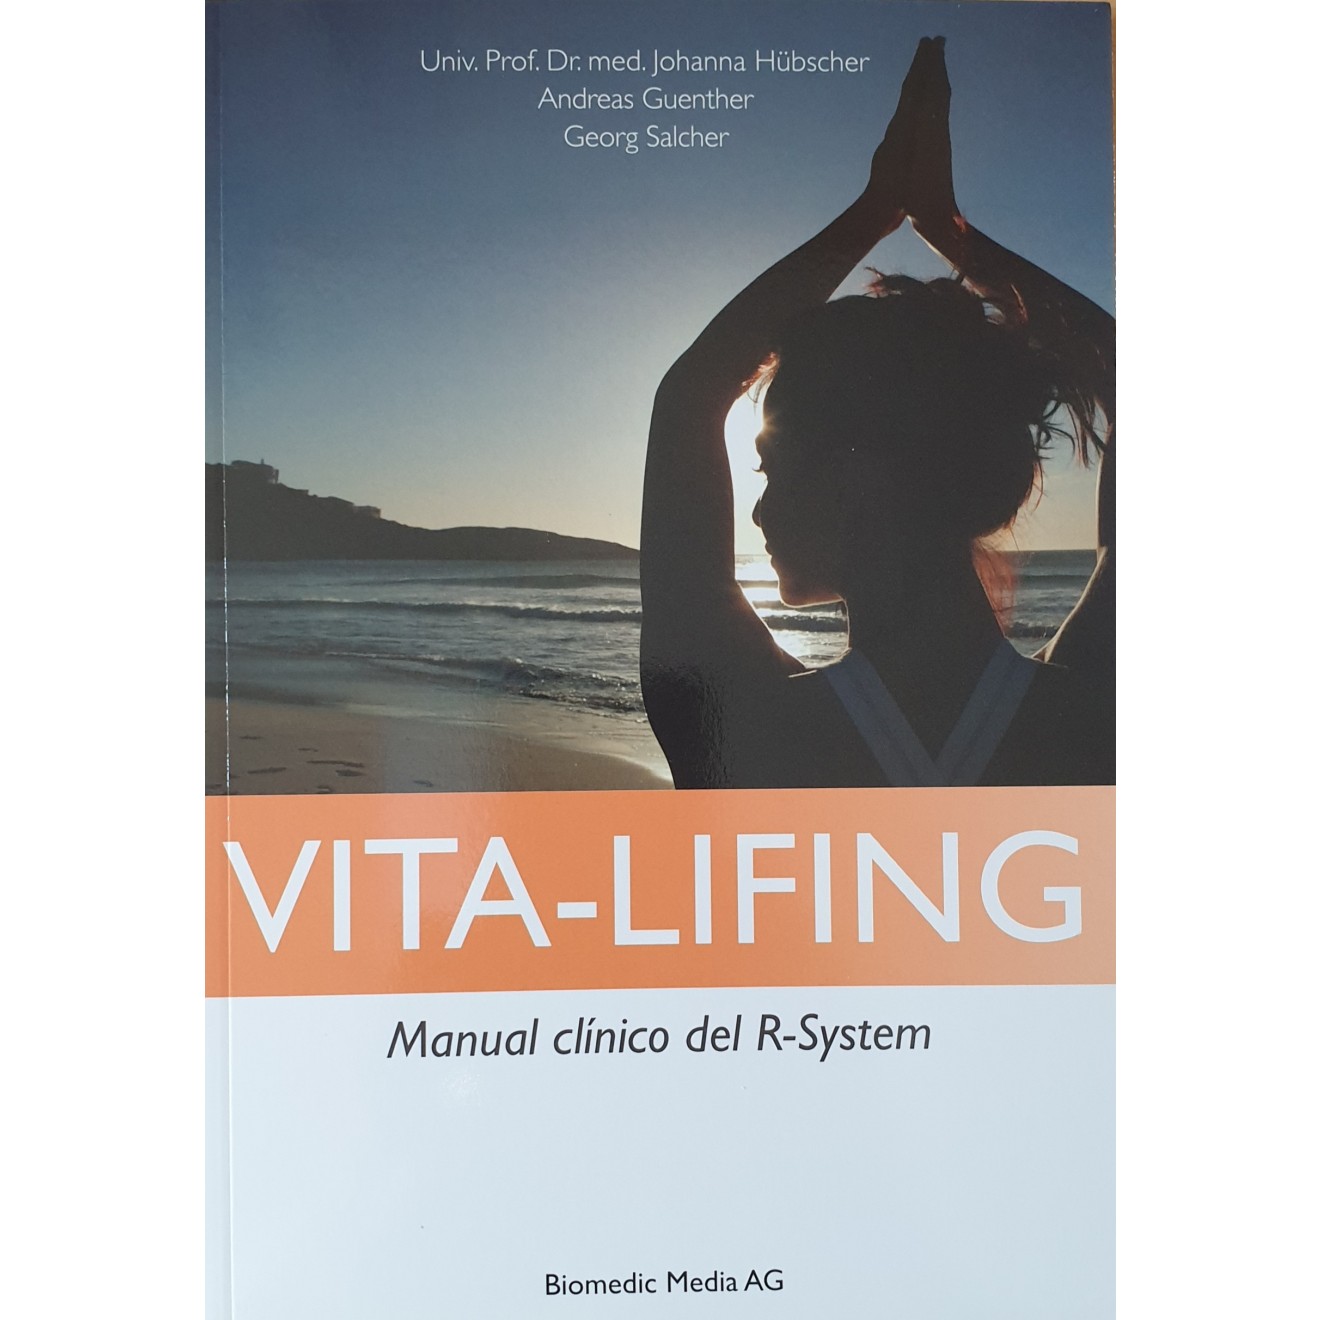 VITA LIFING Manual clinico ESP